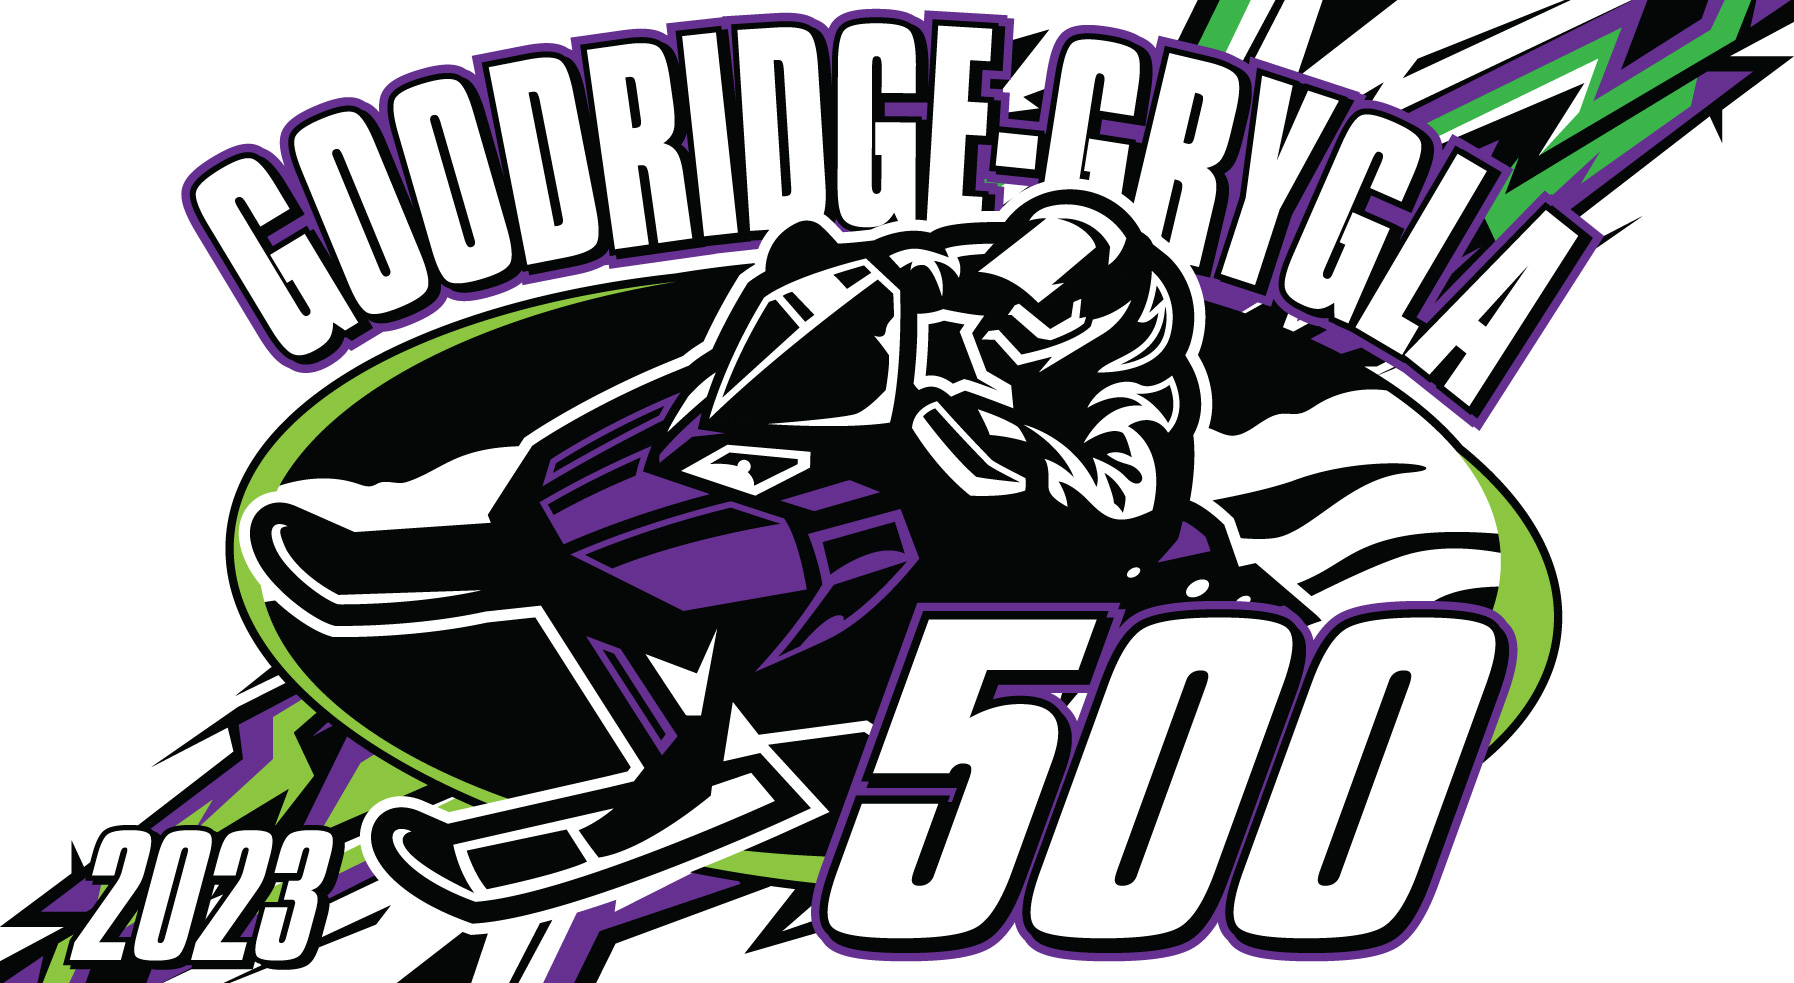 Goodridge / Grygla I500 race day information